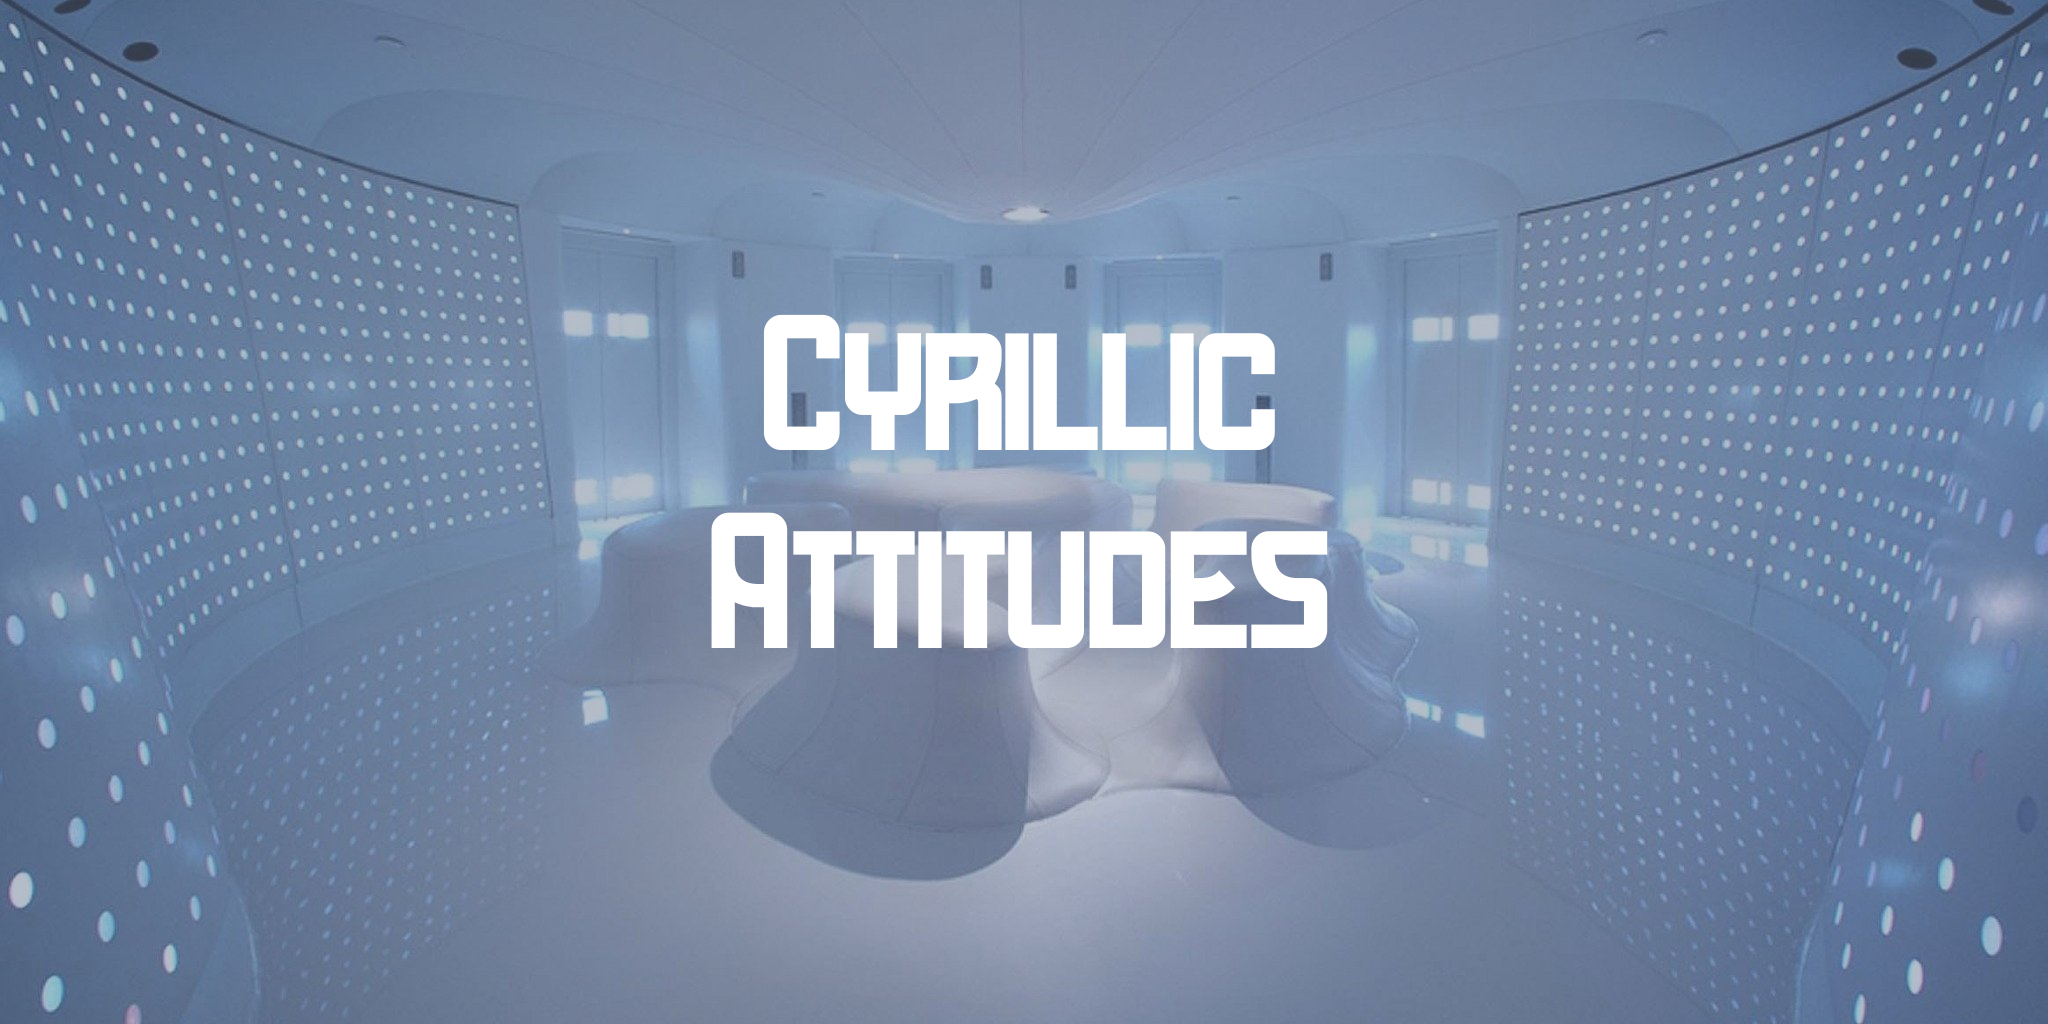 Cyrillic Attitudes